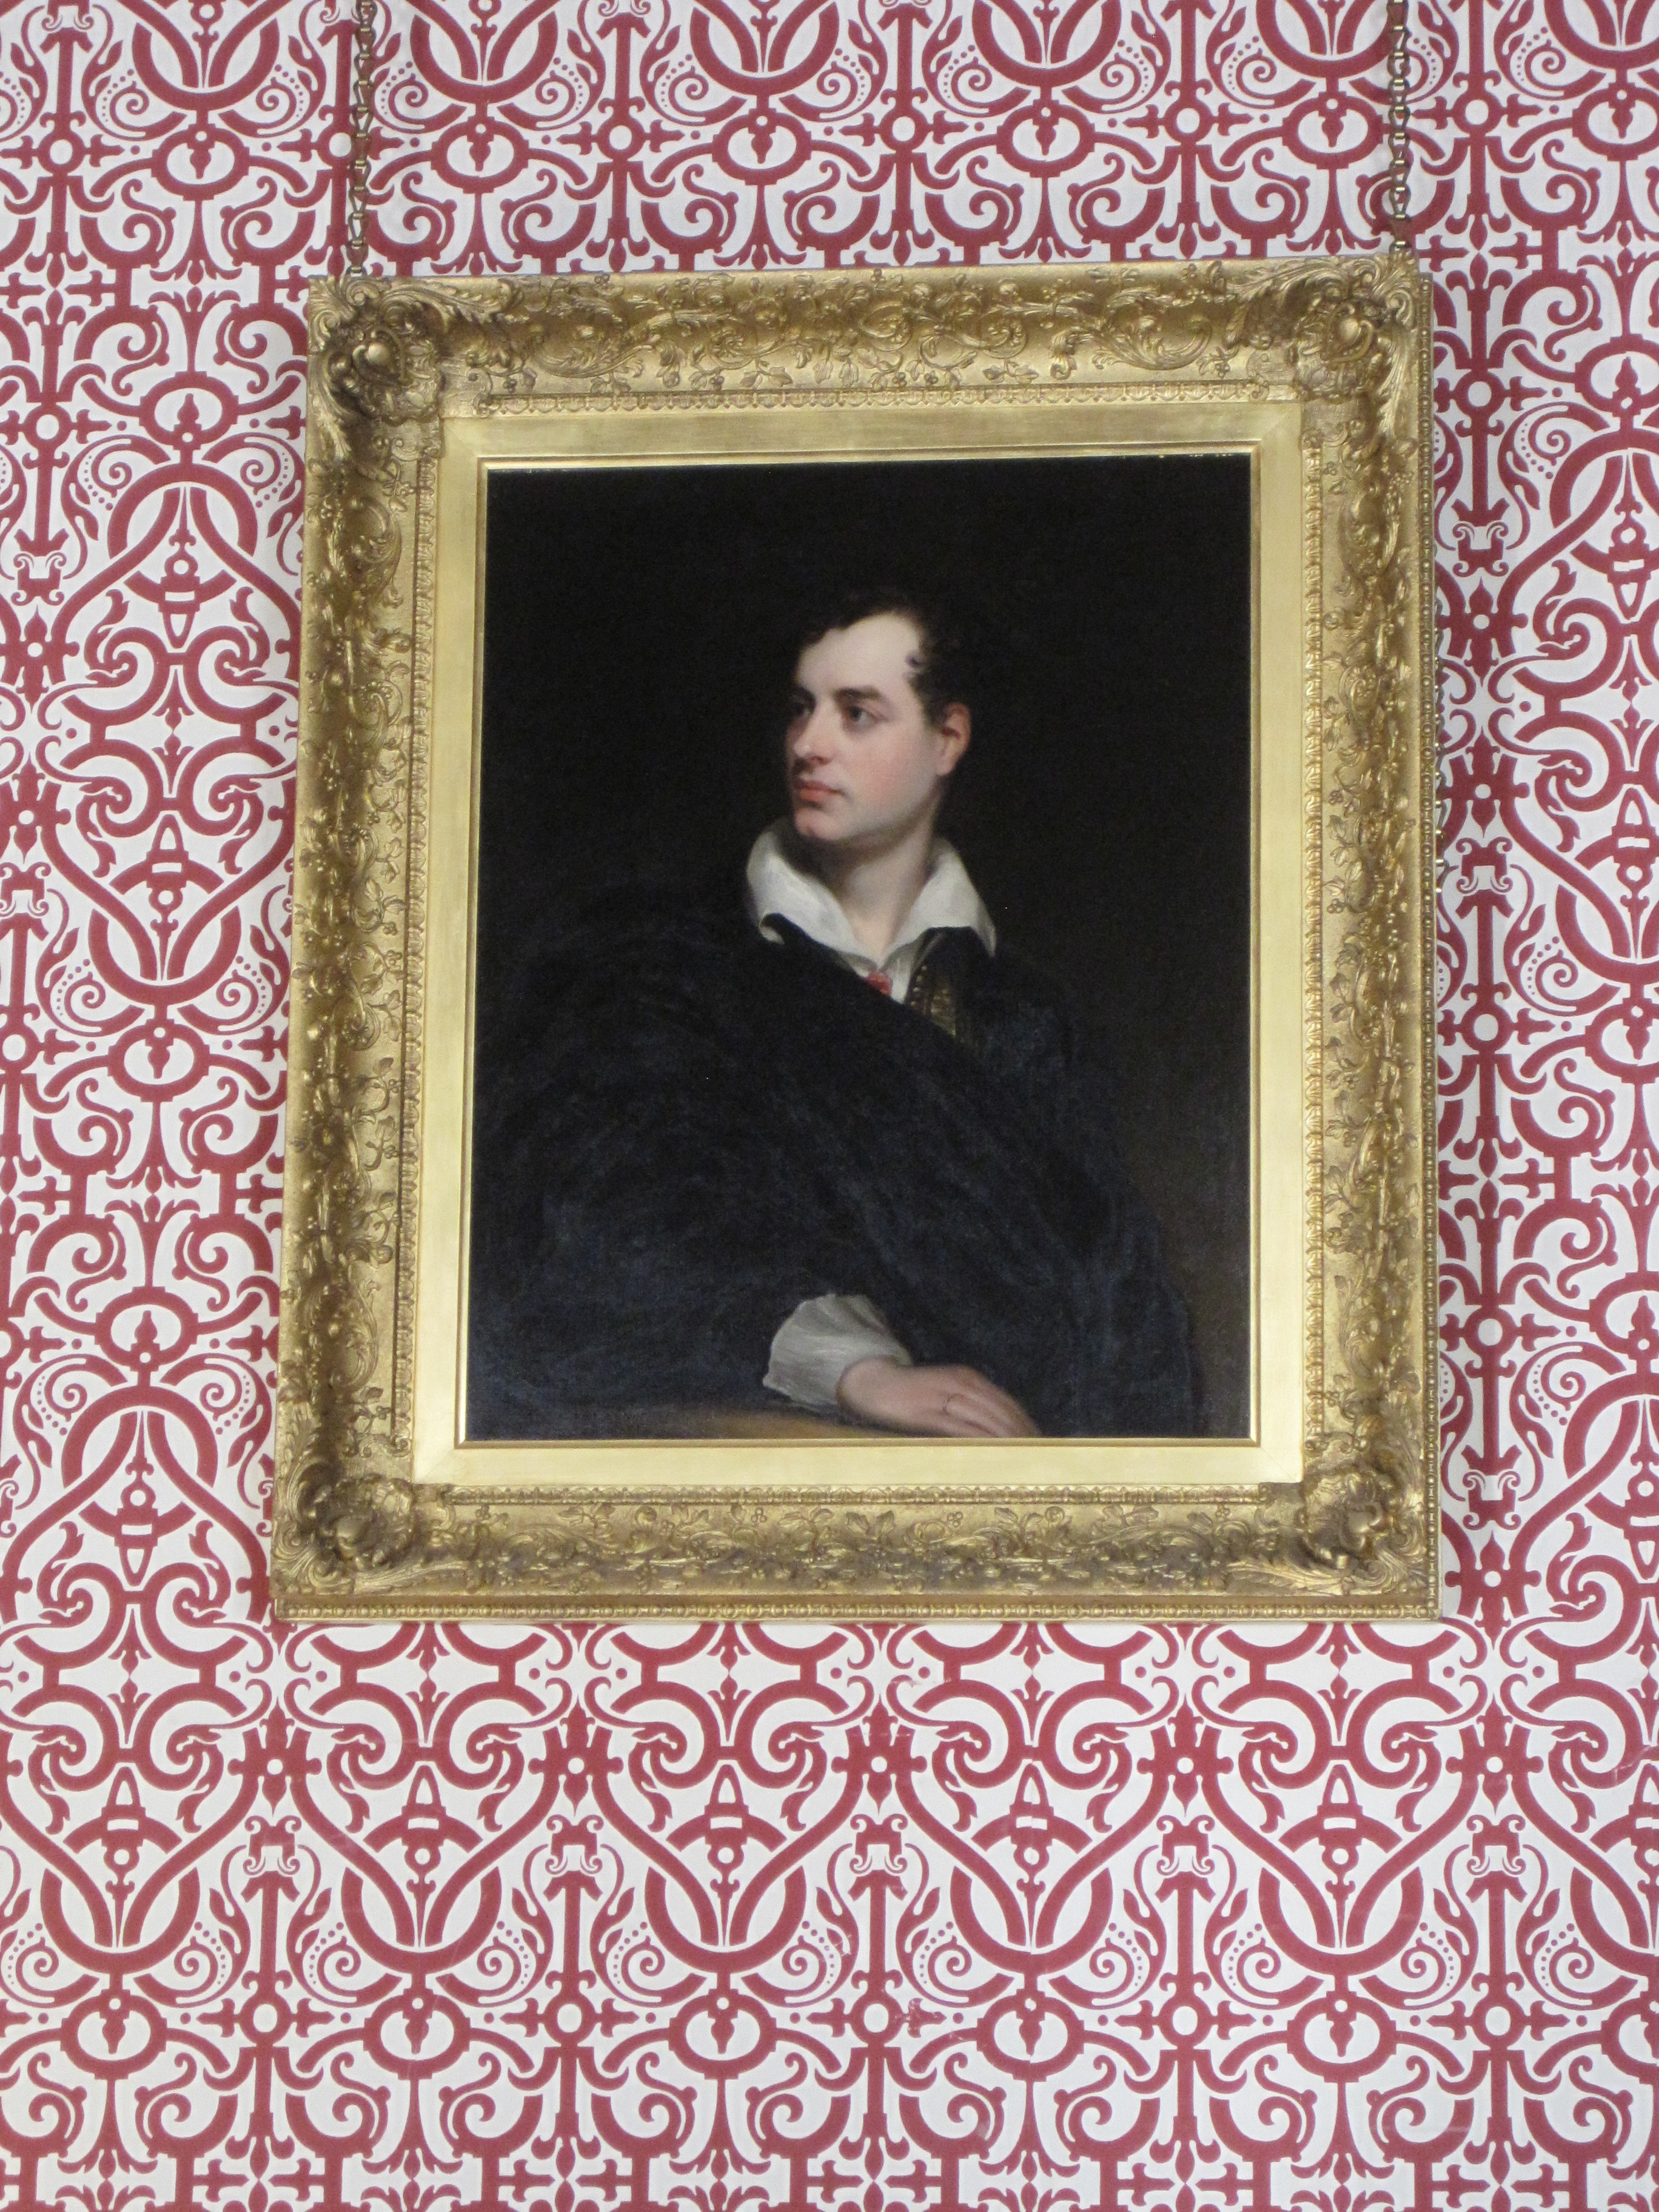 Lord Byron portrait at Newstead Abbey by Juliamaud